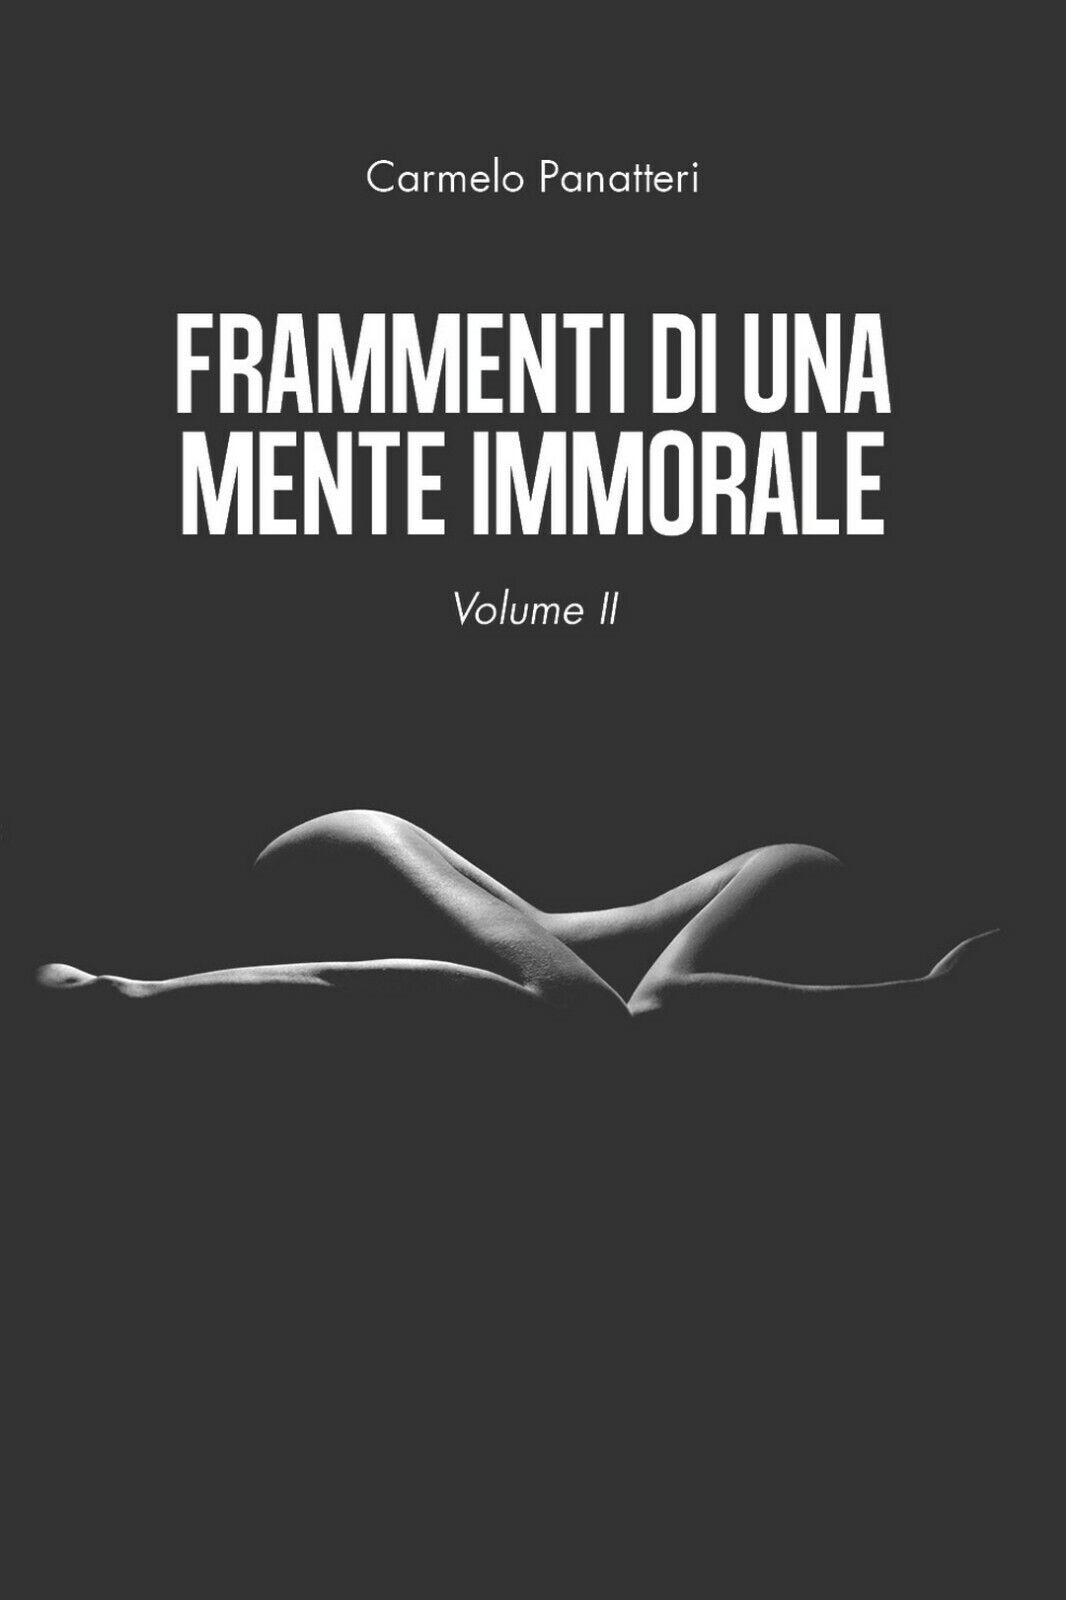 Frammenti di una mente immorale volume II, Carmelo Panatteri,  2020,  Youcanpr.